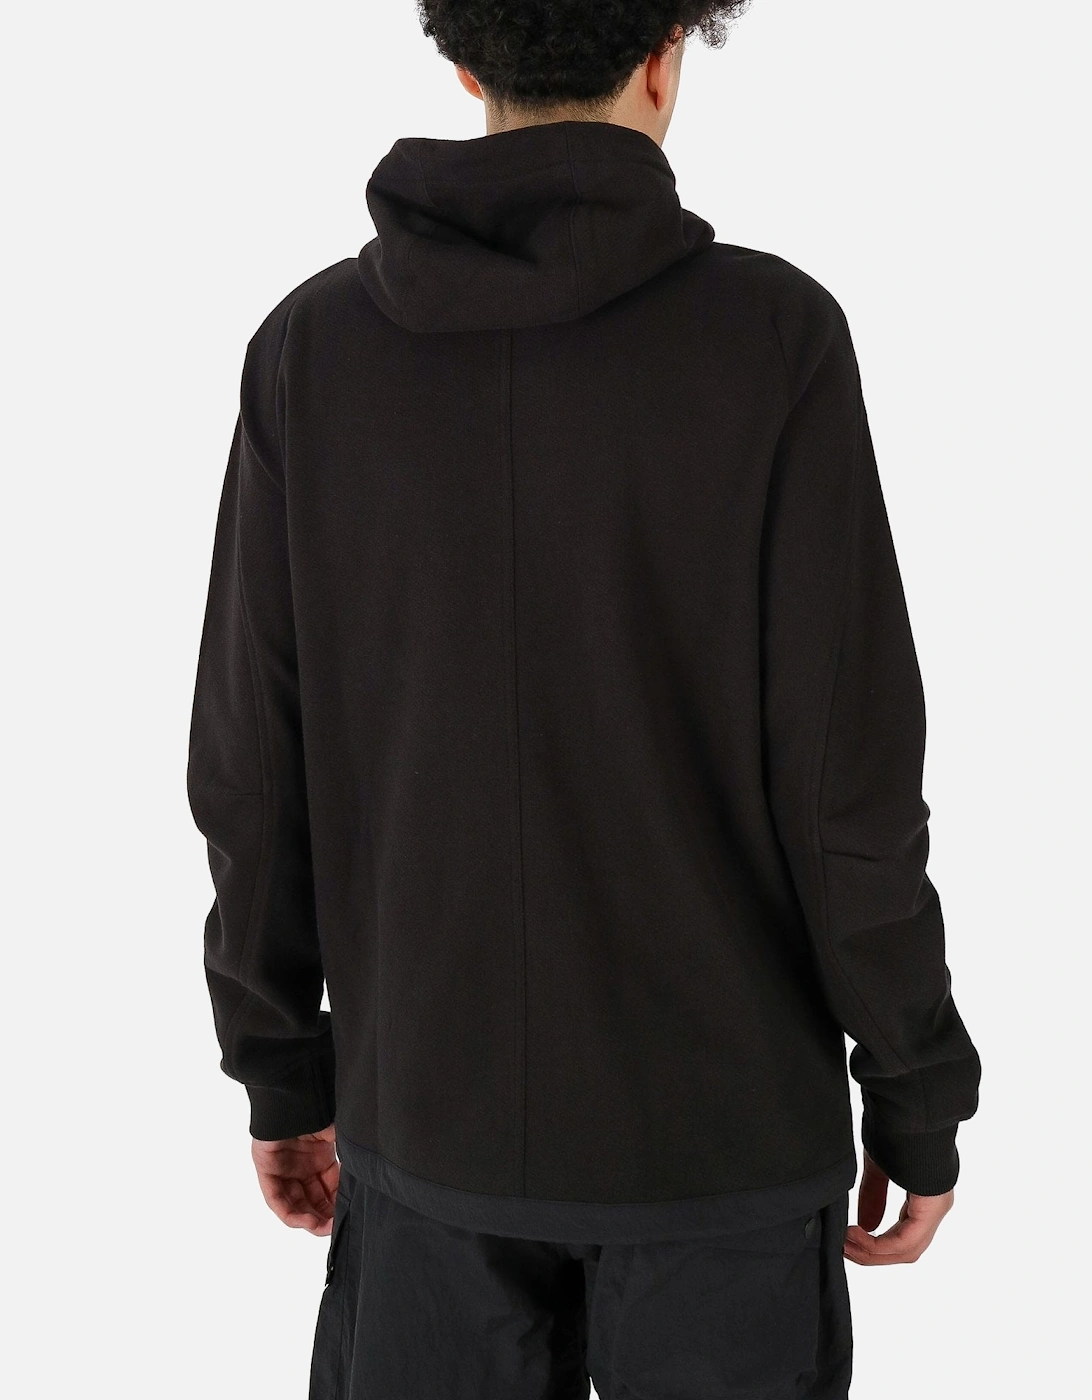 Asymmetric Articulated Hooded Sweatshirt